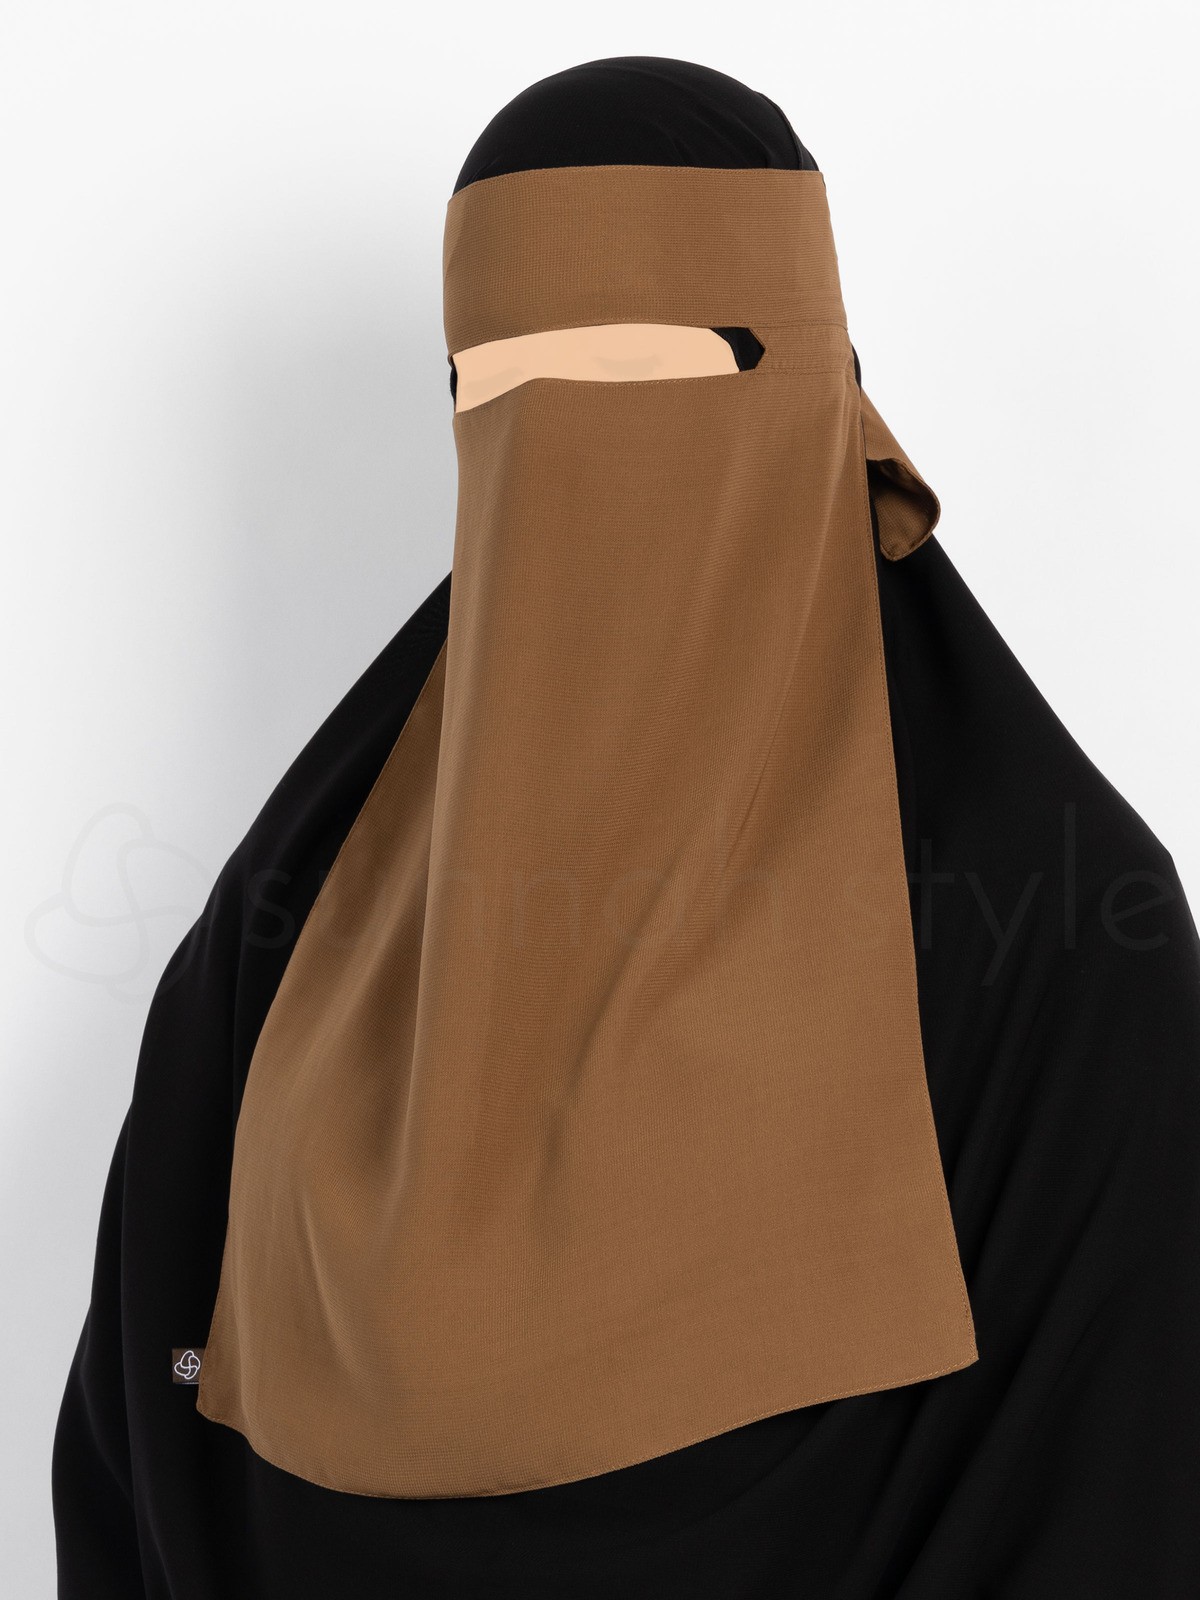 Sunnah Style - No-Pinch One Layer Niqab (Caramel)